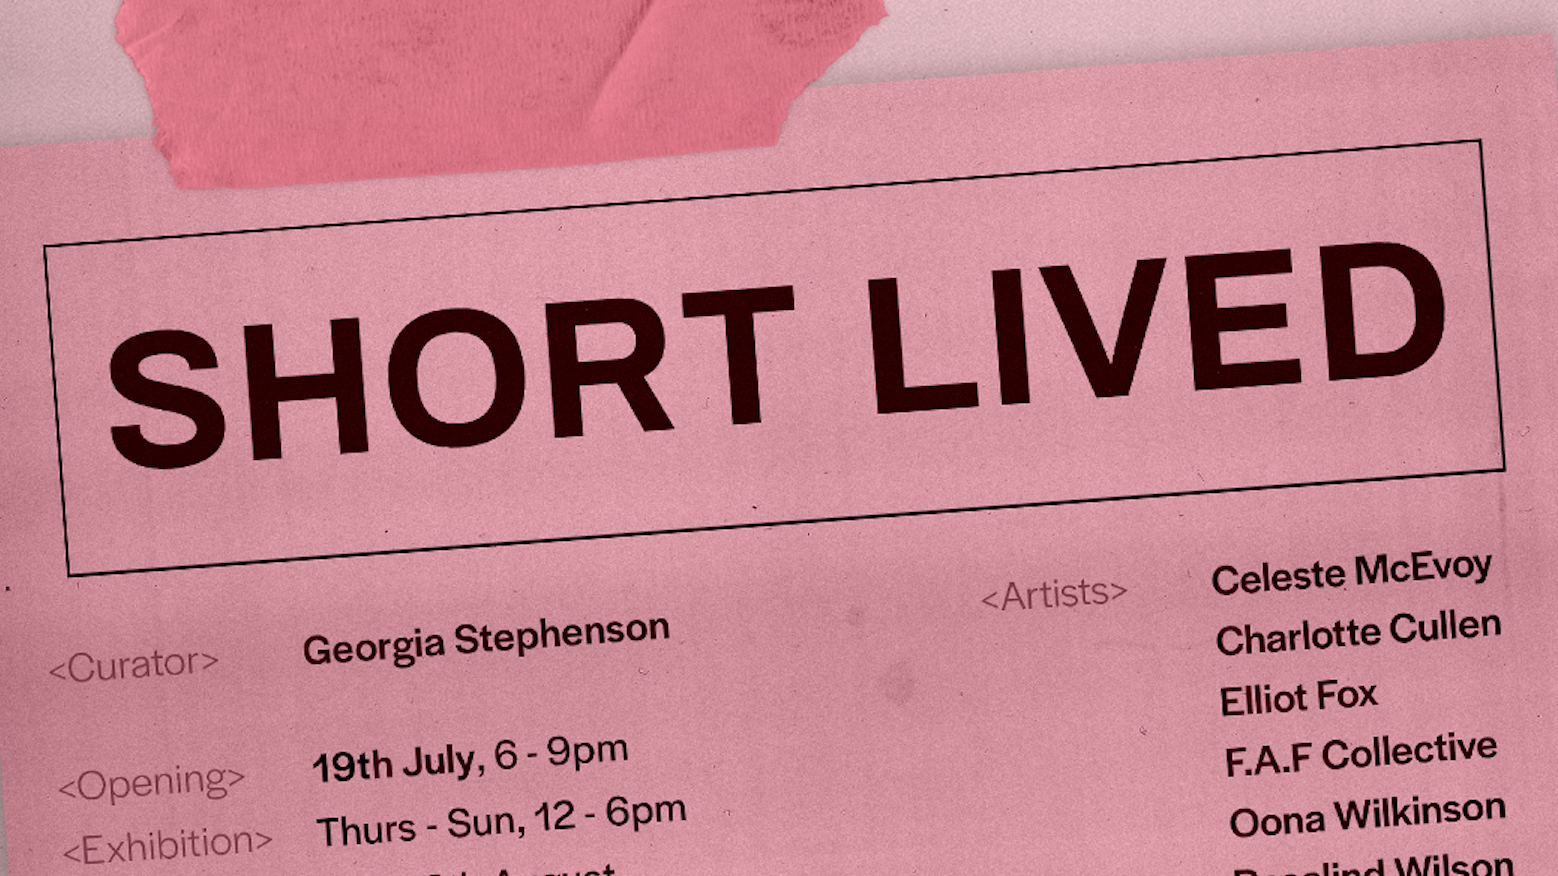 "SHORT LIVED" by Georgia Stephenson